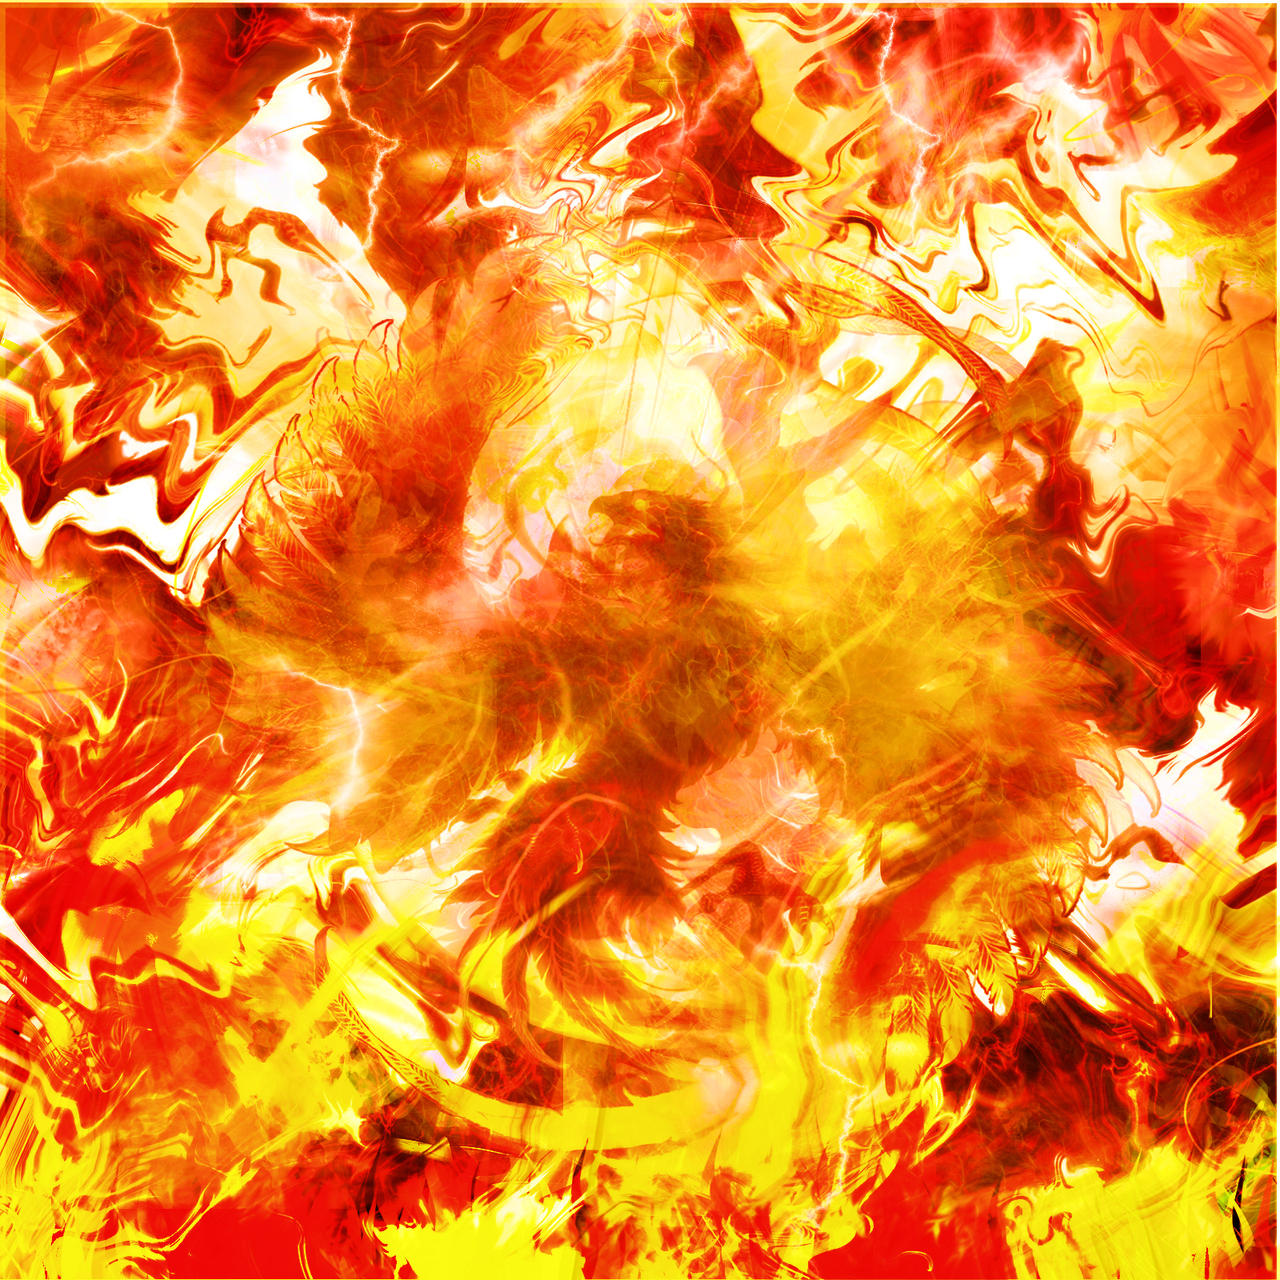 wallpaper phoenix - the fire bird by DarDream on DeviantArt